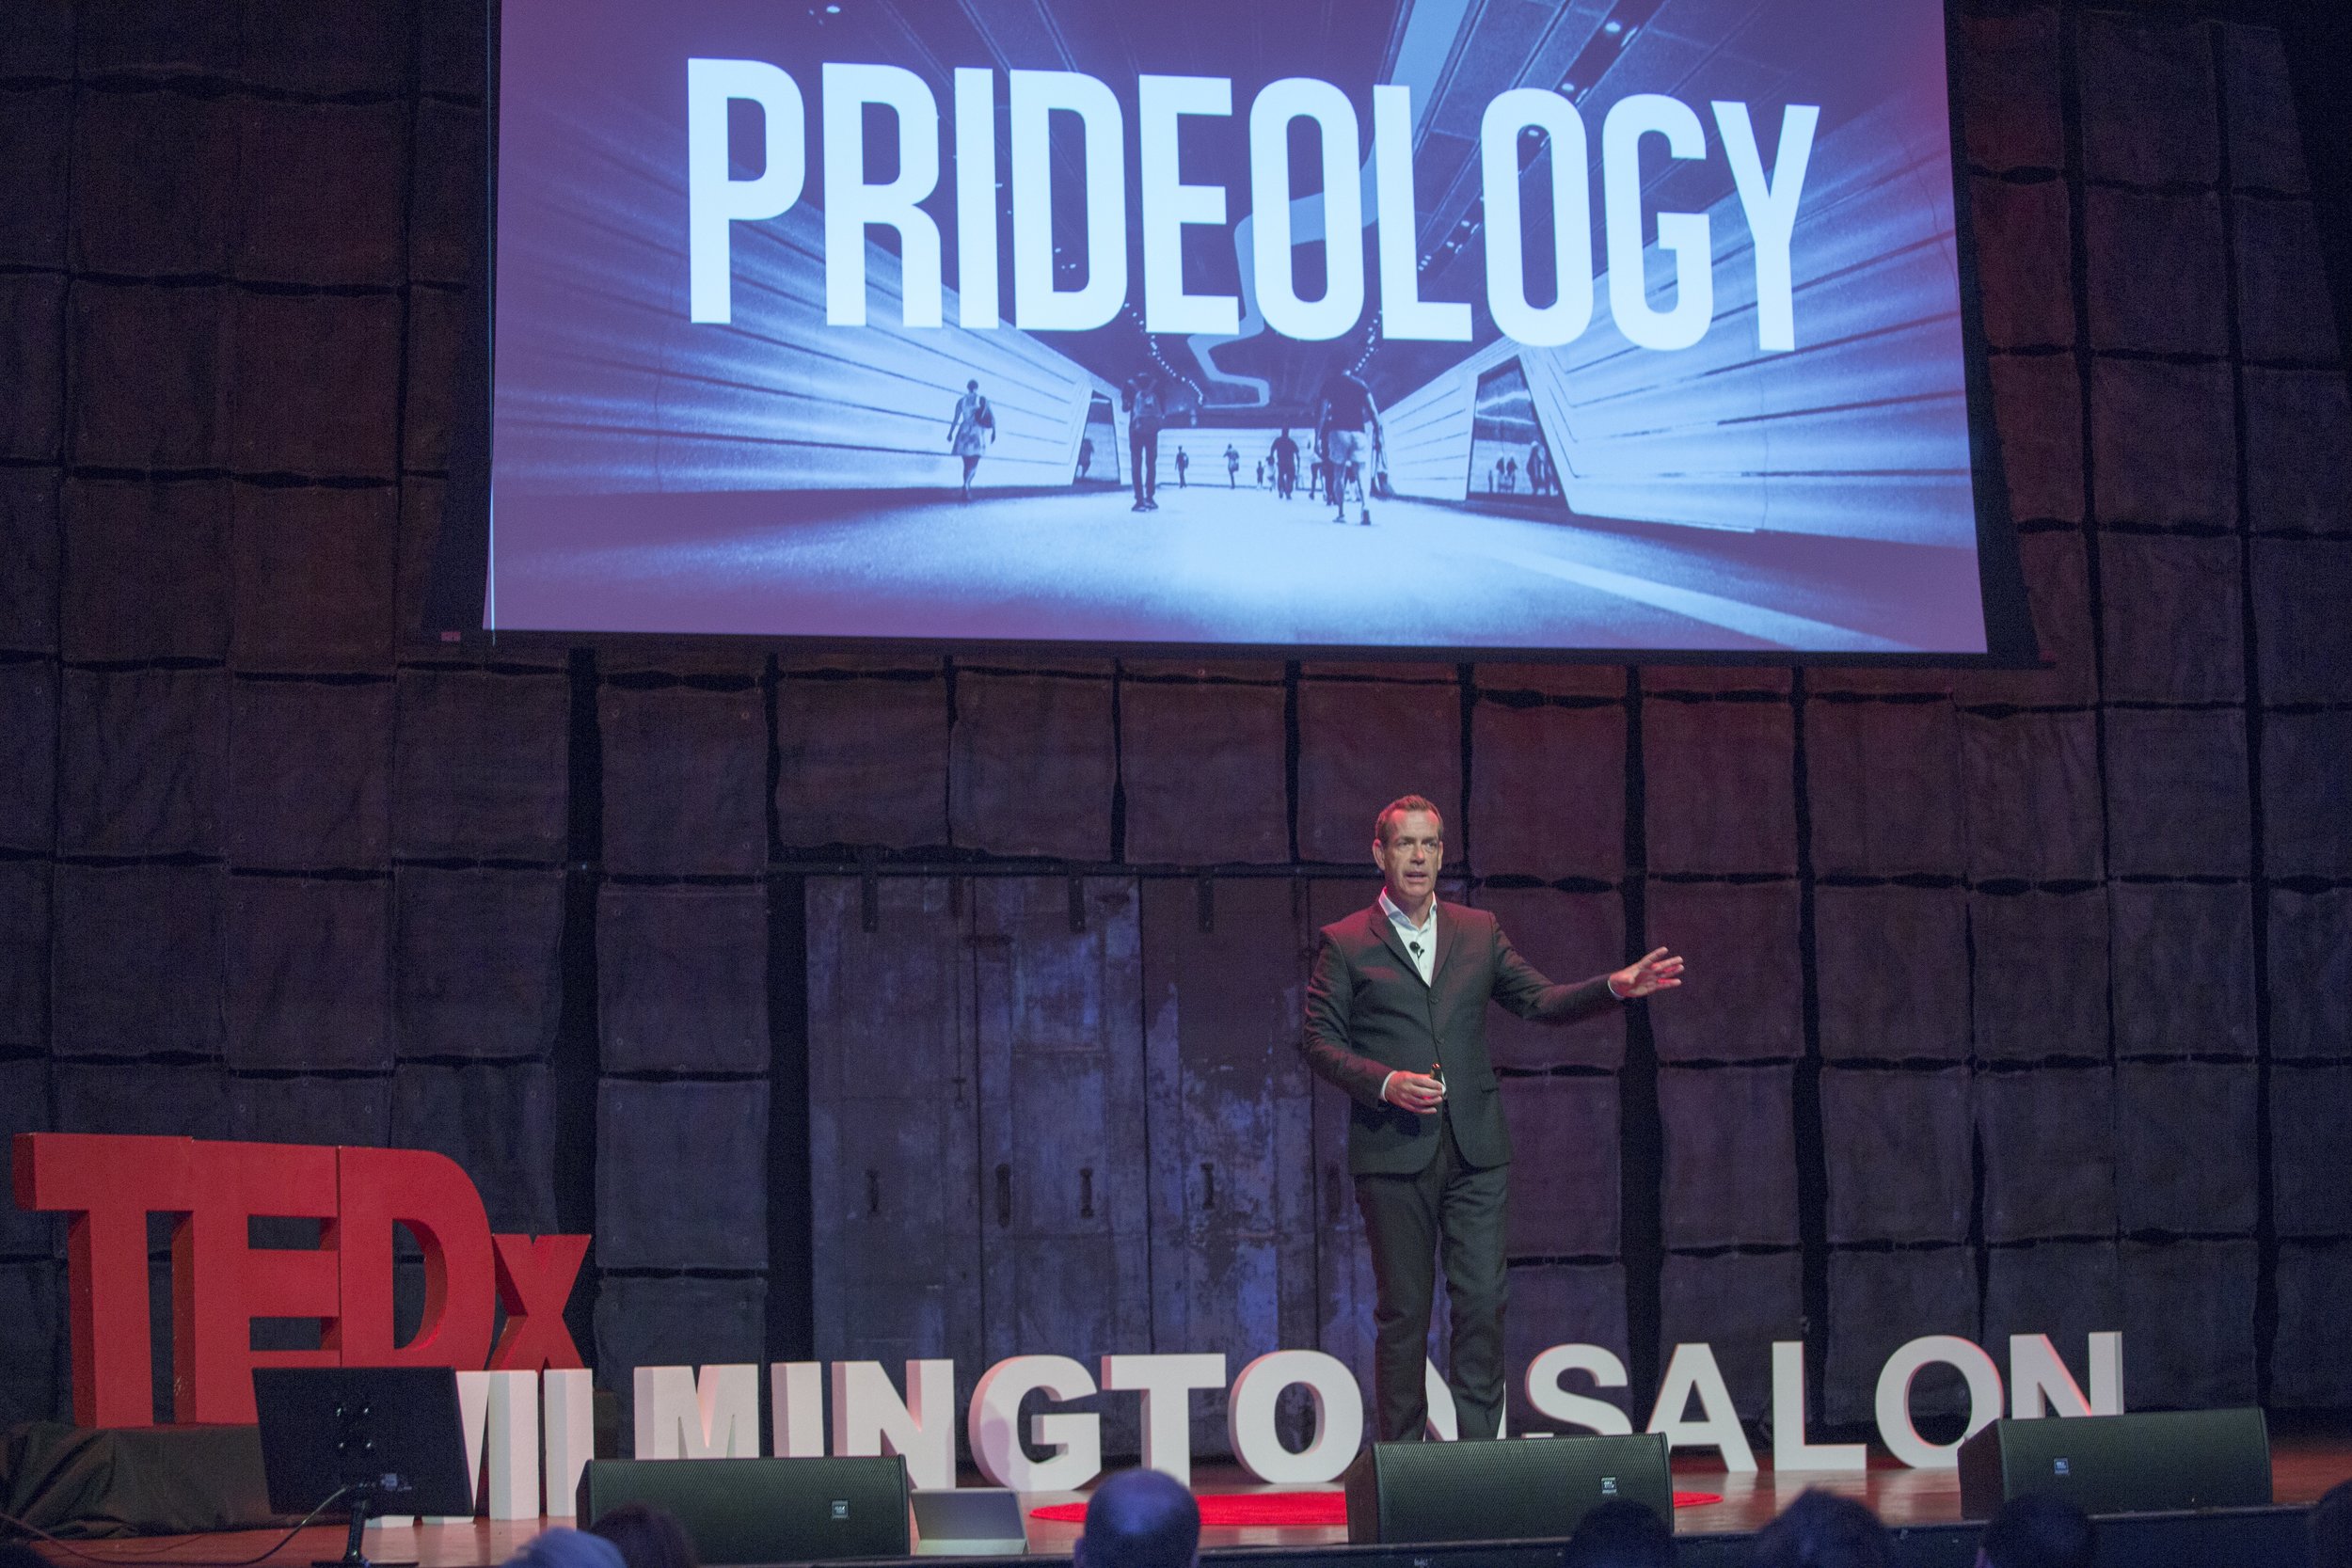 PRIDEOLOGY™ TEDx